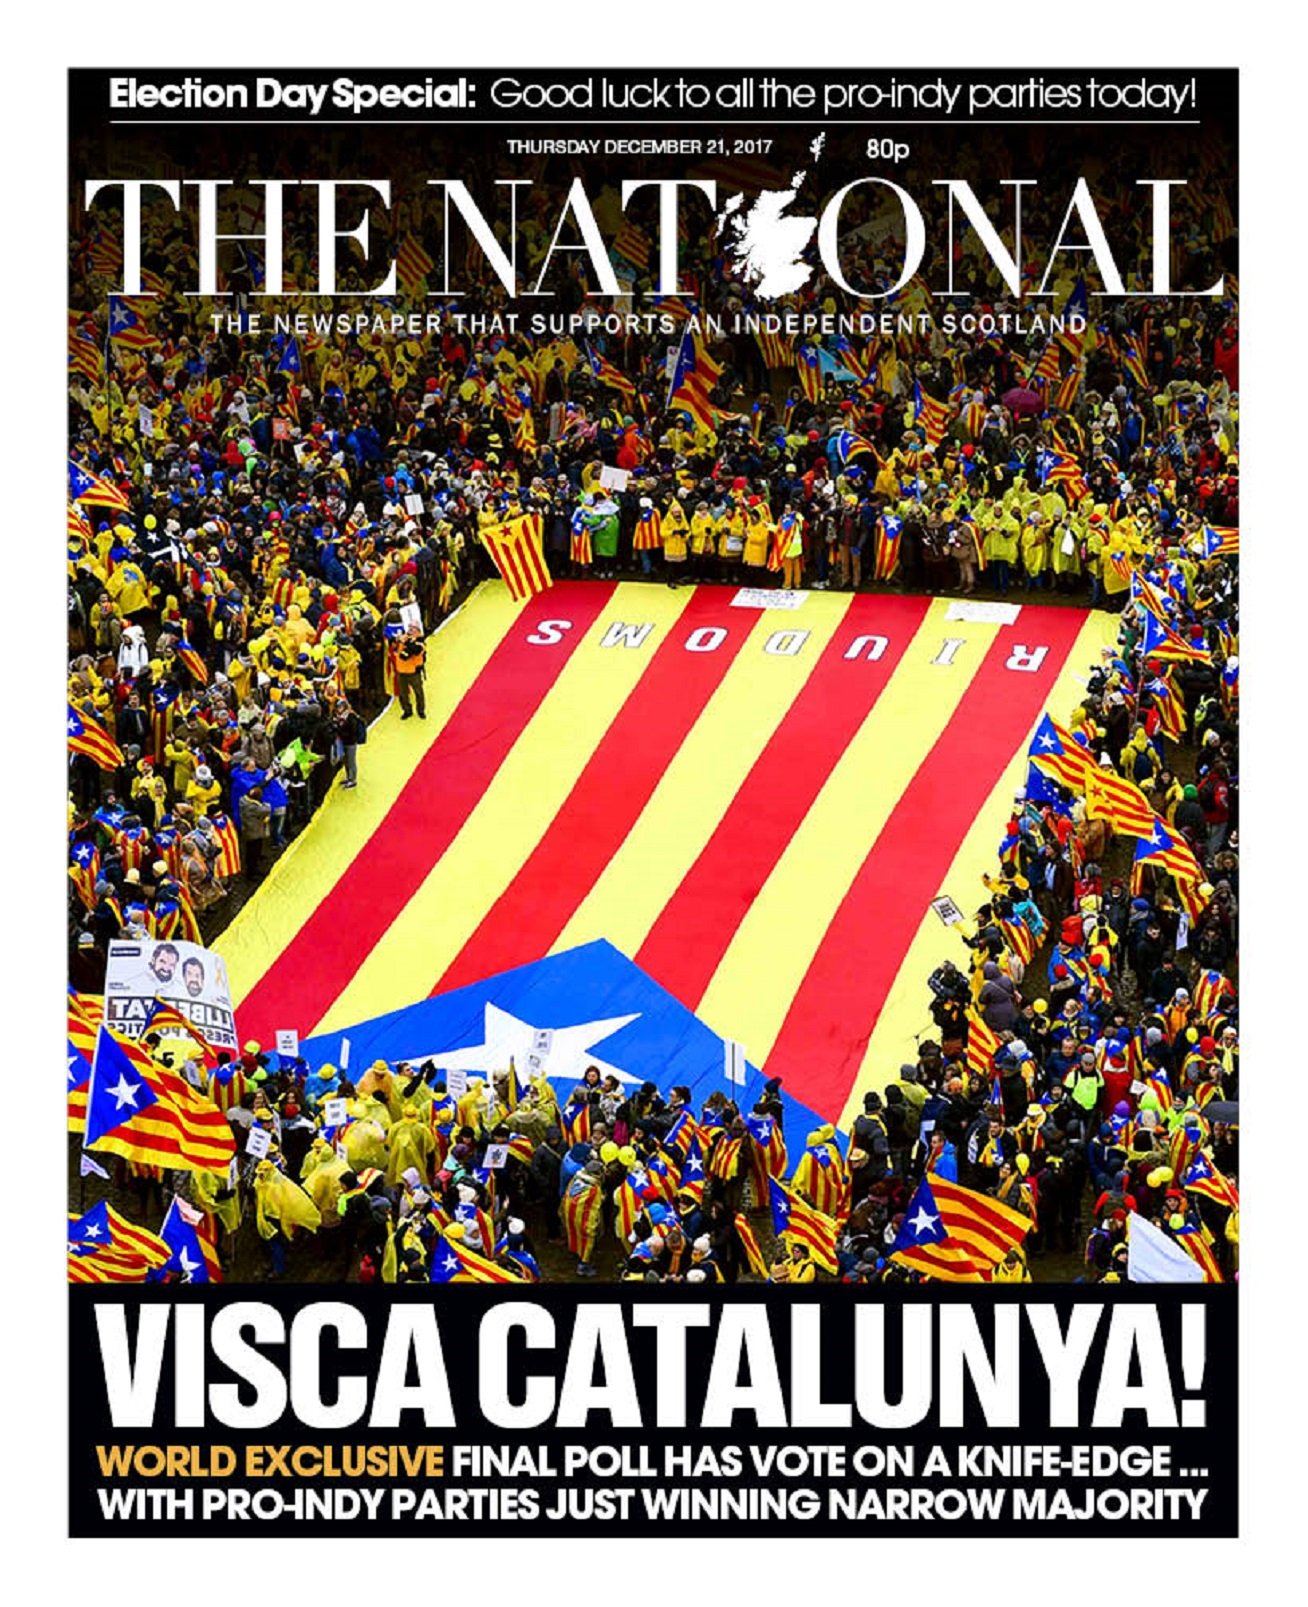 'The National', en su portada: "Visca Catalunya!"